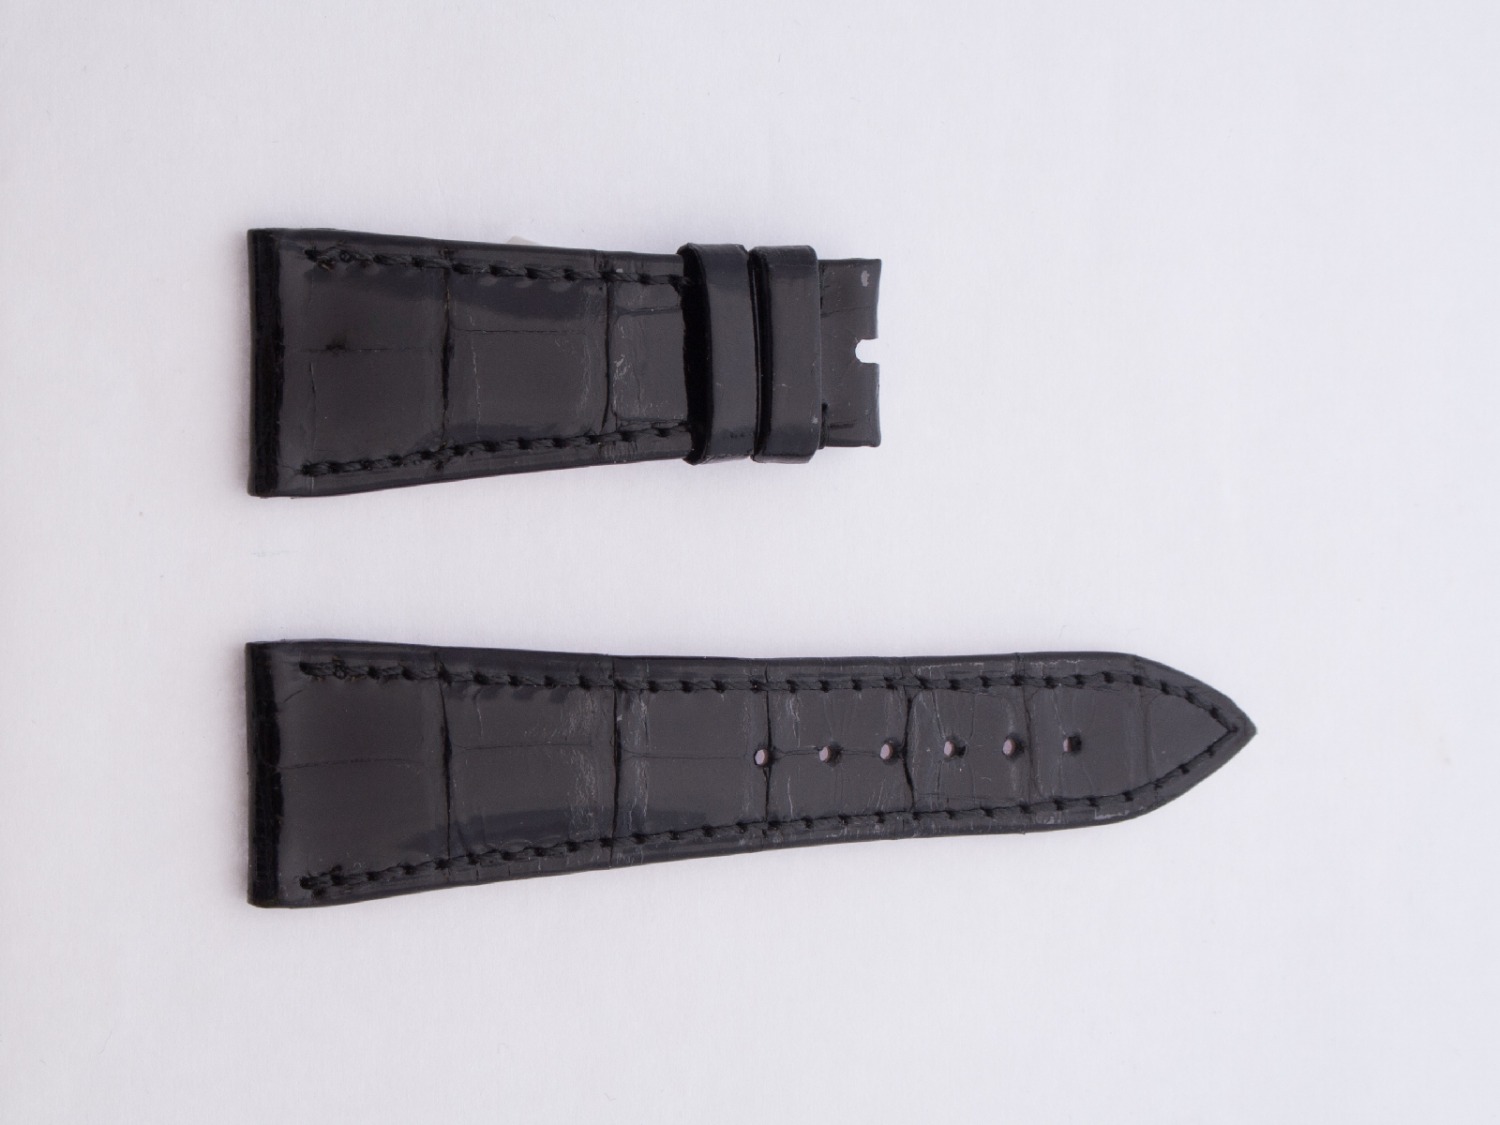 Crocodile Leather Audemars Piguet Royal Oak Offshore Strap, glossy black